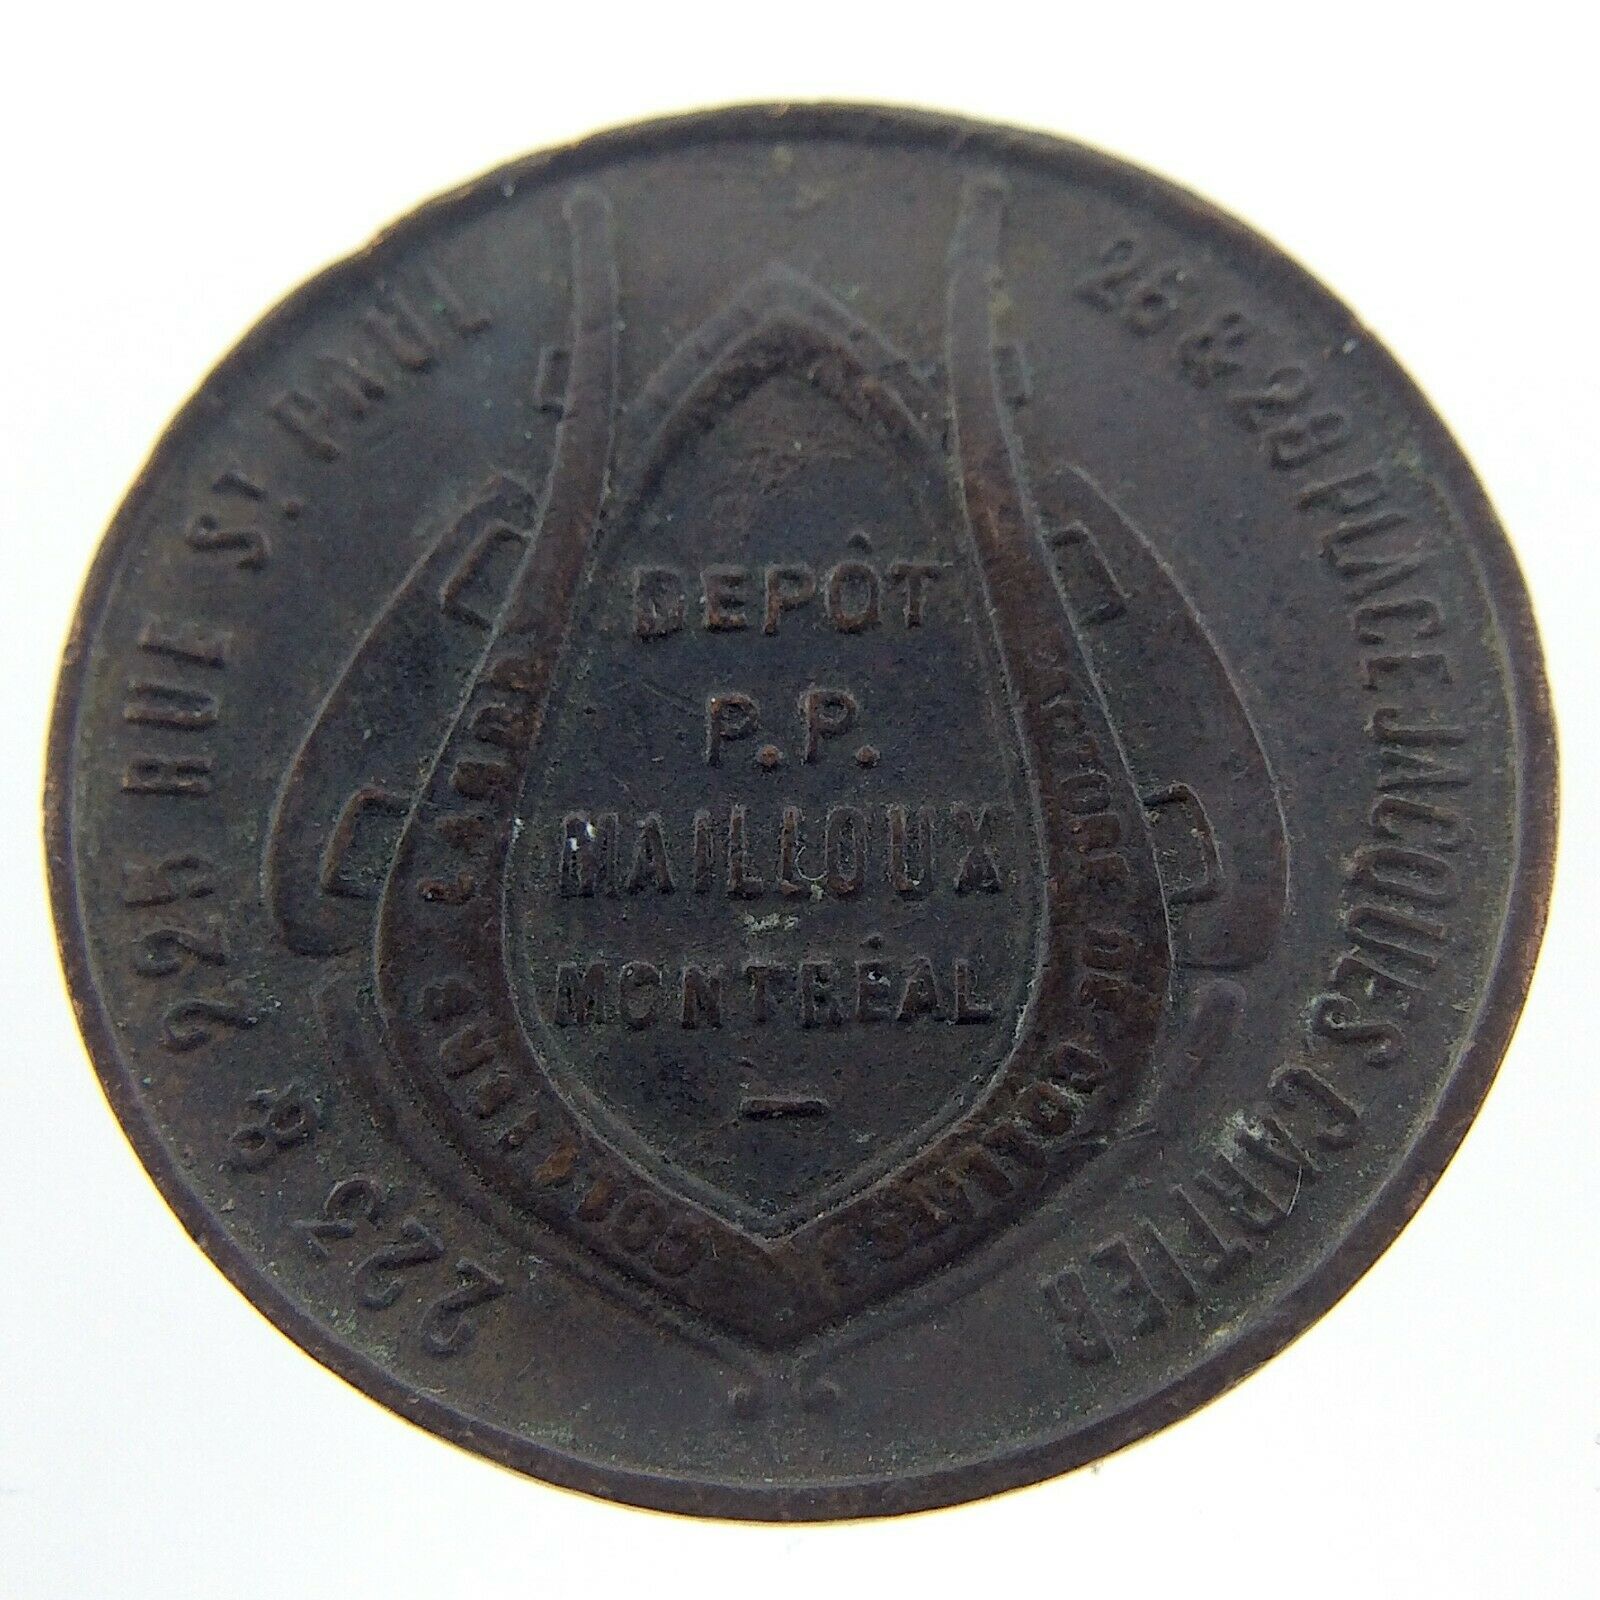 Balmoral Oil Ludger Gravel Depot Pp Mailloux Montreal Merchant Medallion N262